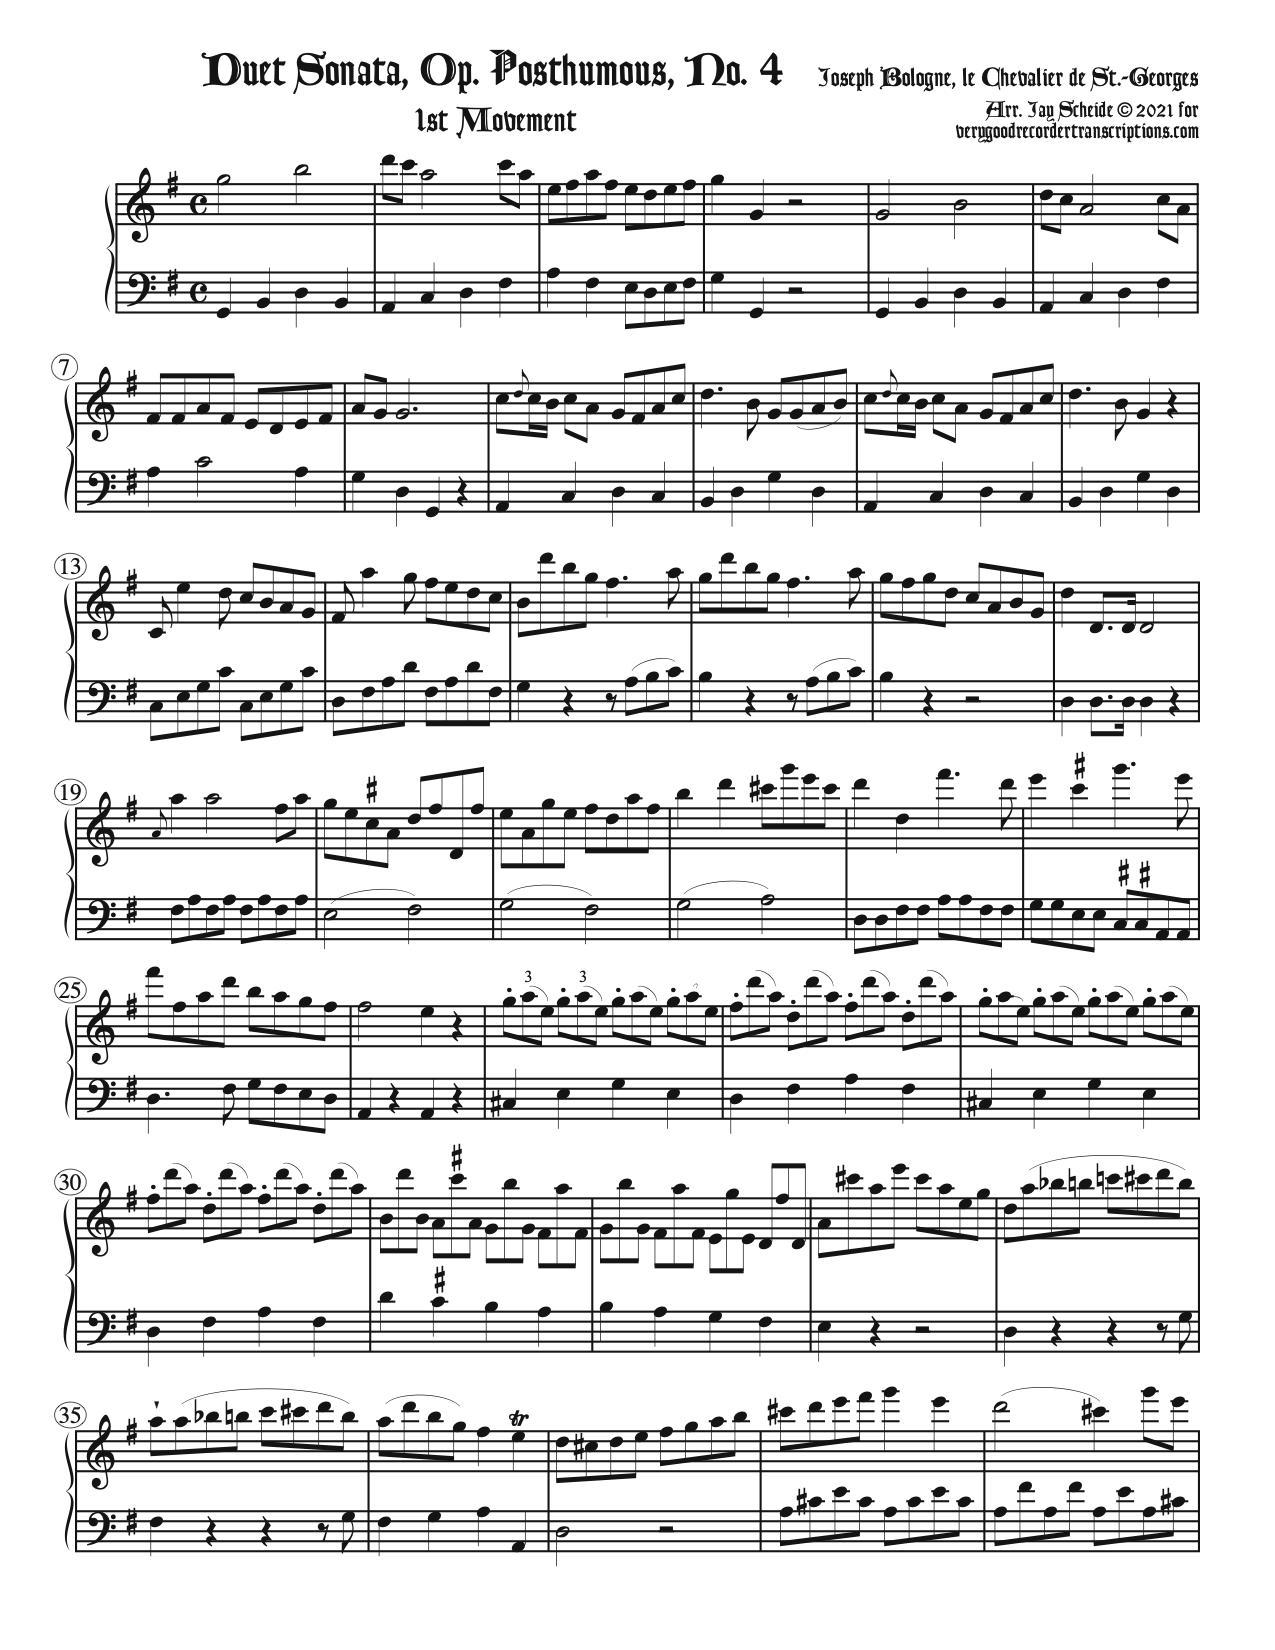 Duet Sonata Op. Posthumous No. 4